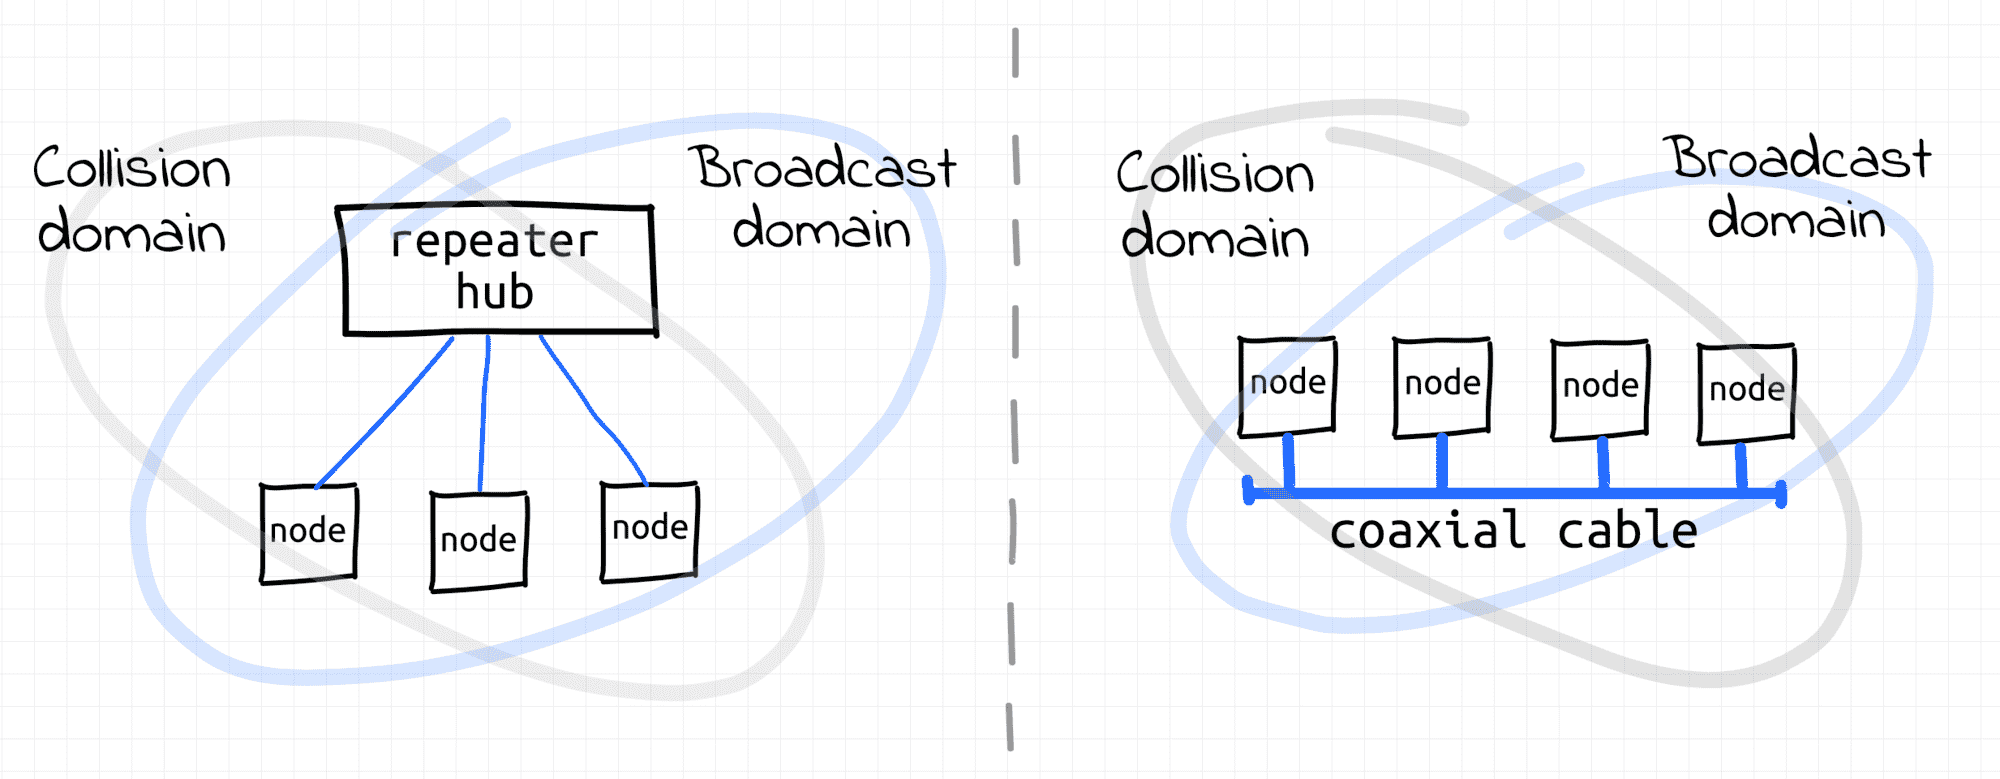 Collision domain vs. Broadcast domain